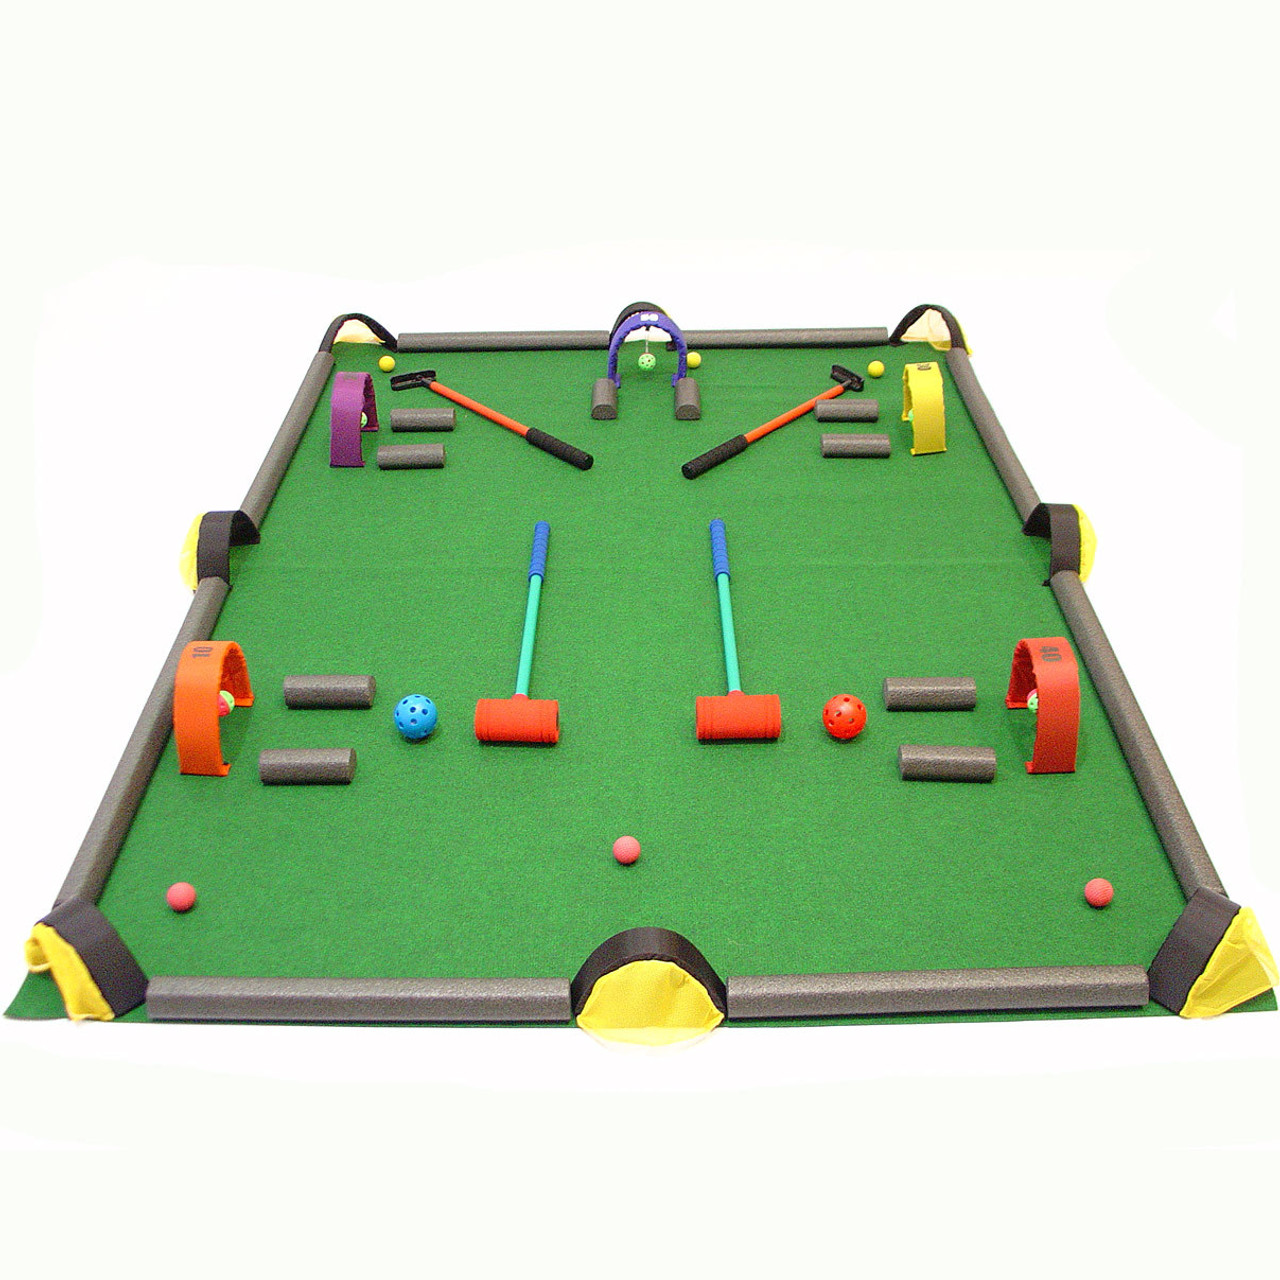 Golf / Croquet / Billiards Game Set - Athletic Stuff